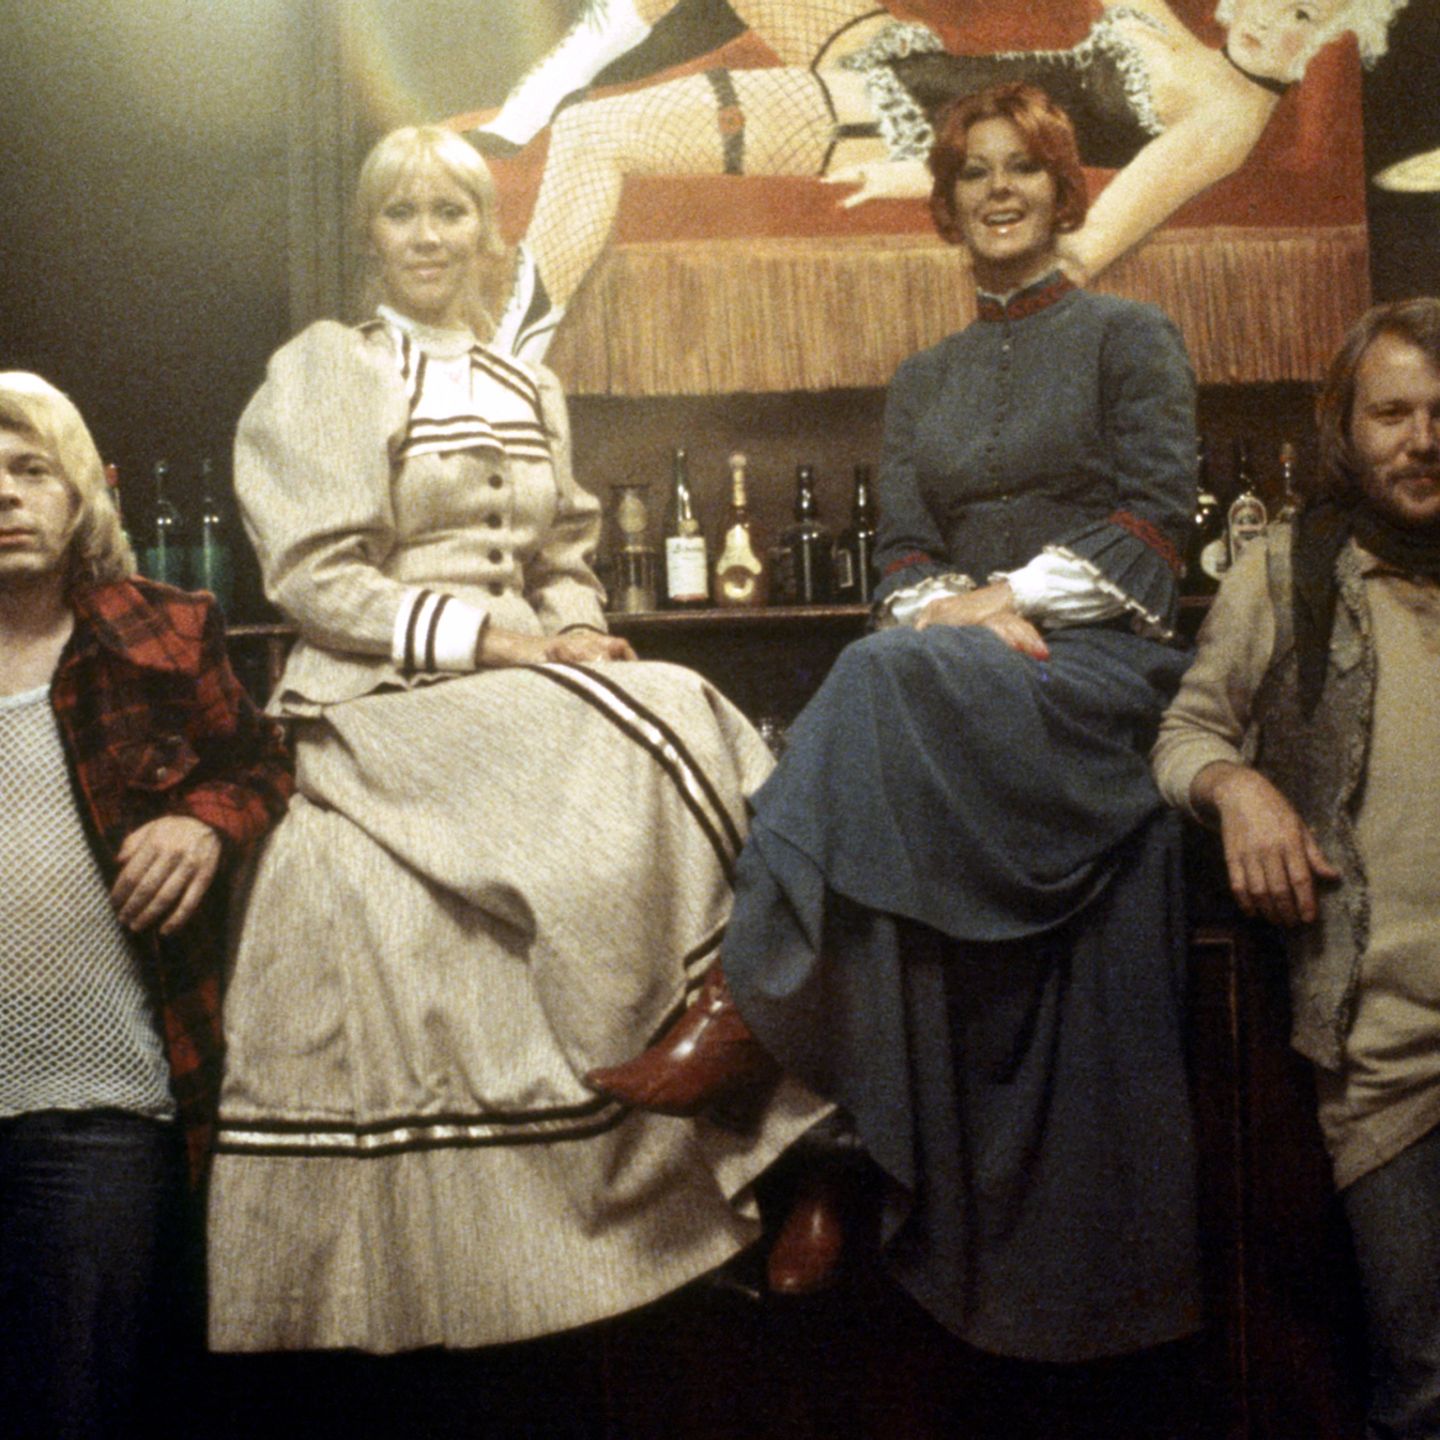 ABBA: THE MOVIE - FAN EVENT